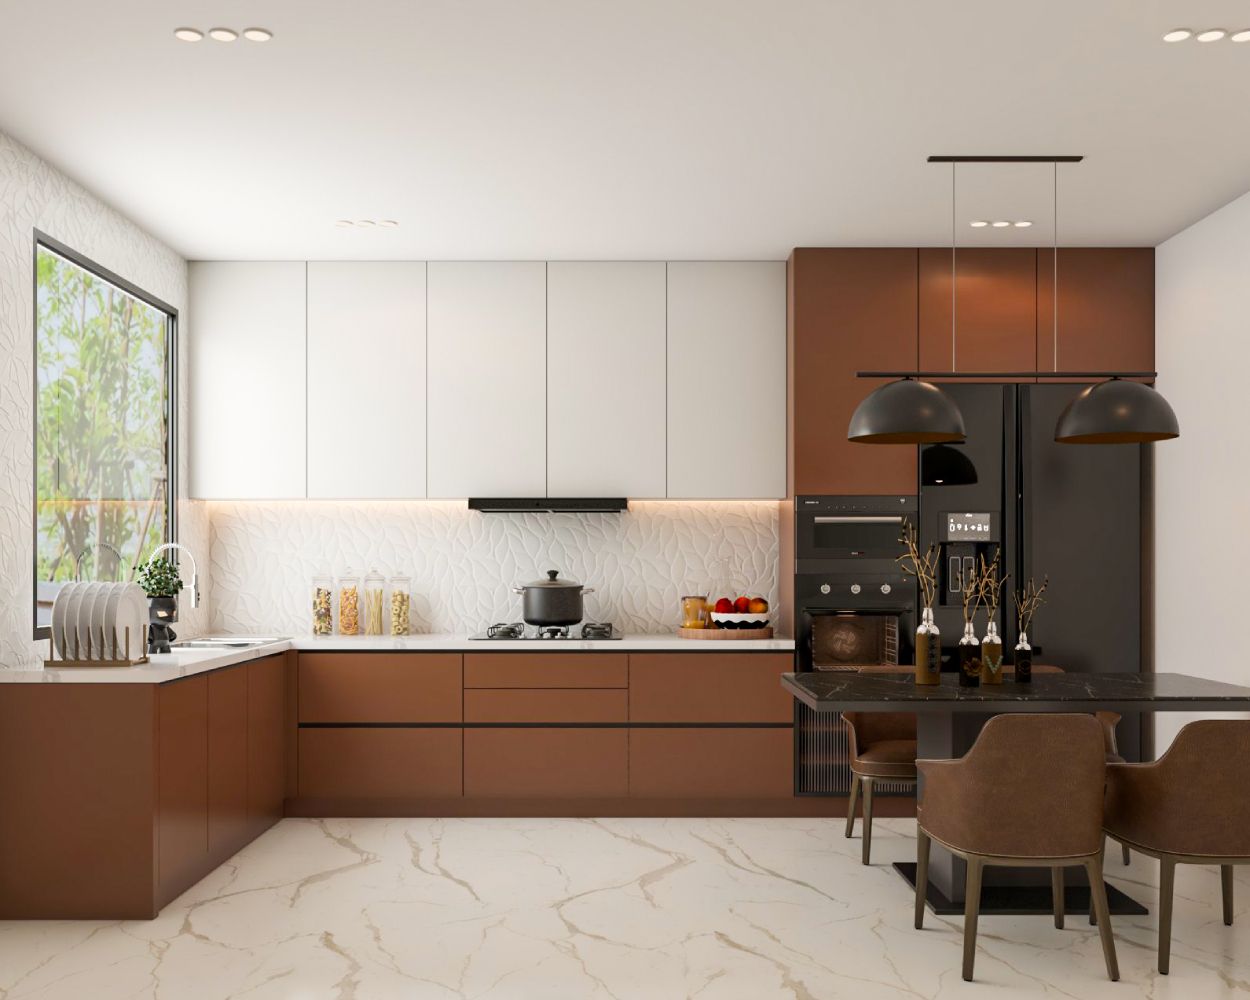 Contemporary Regalia L-Shape Kitchen Design With Brown And White Cabinets